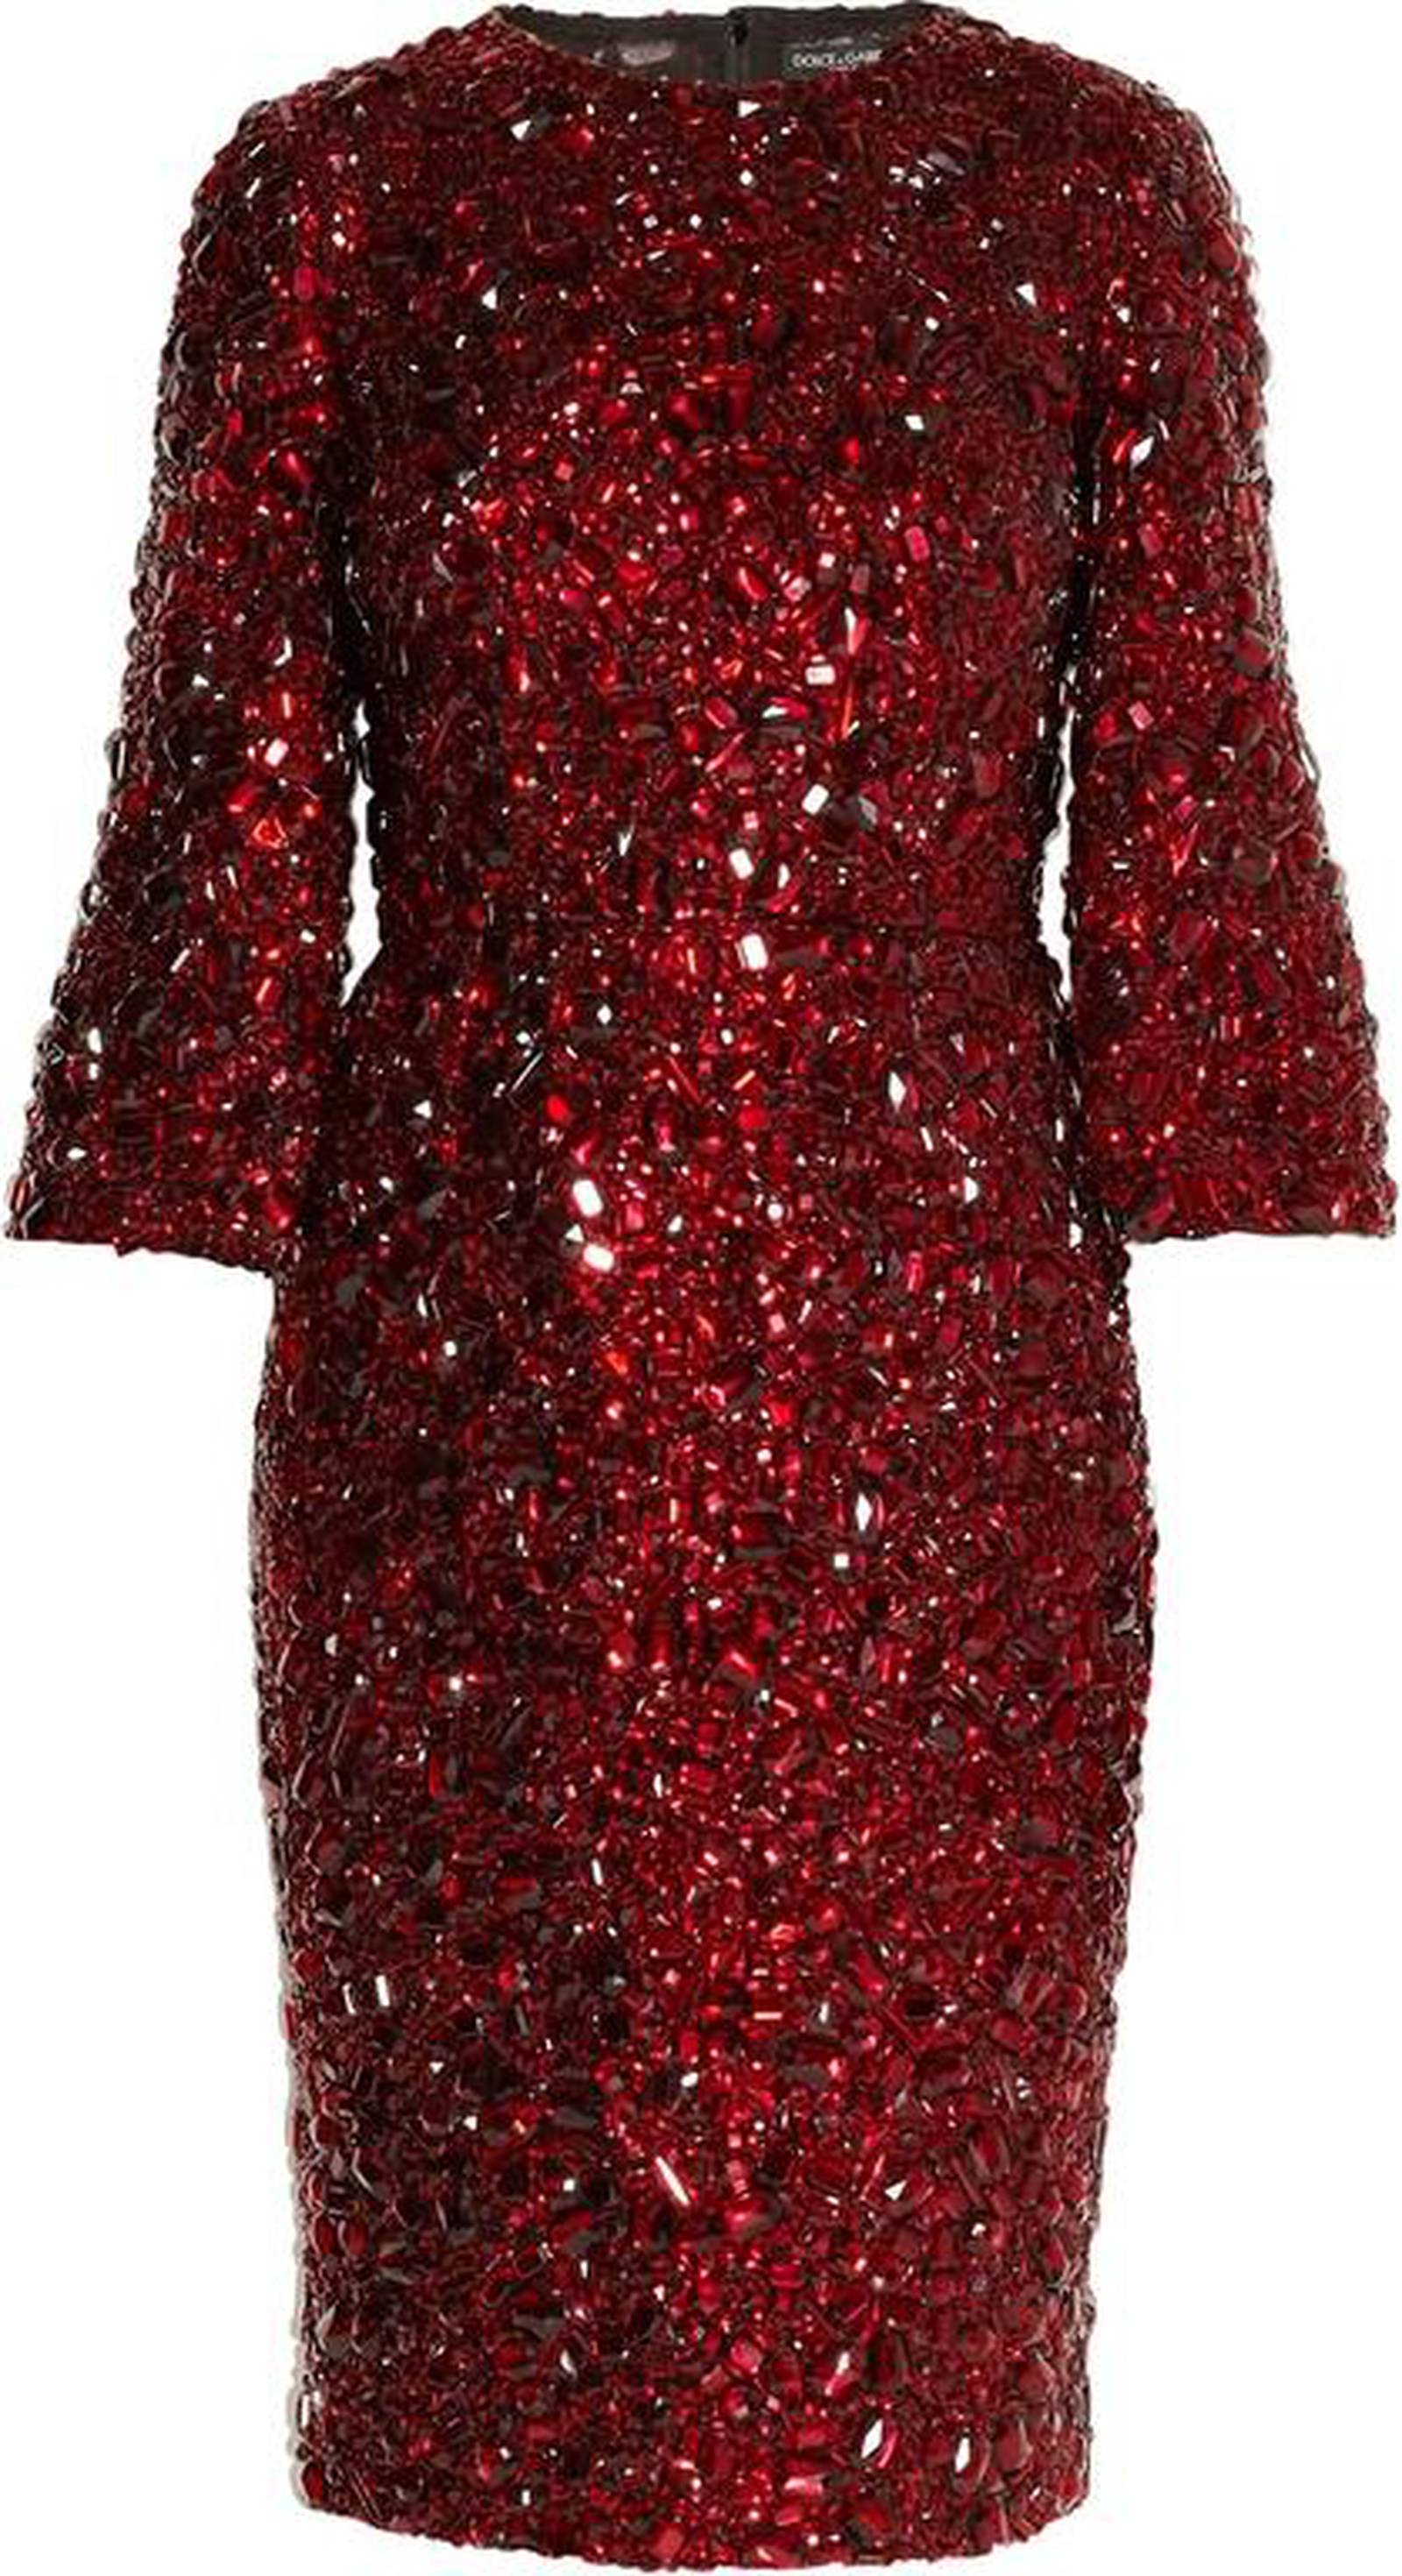 The Decoder: Ruby Dress by Dolce & Gabbana